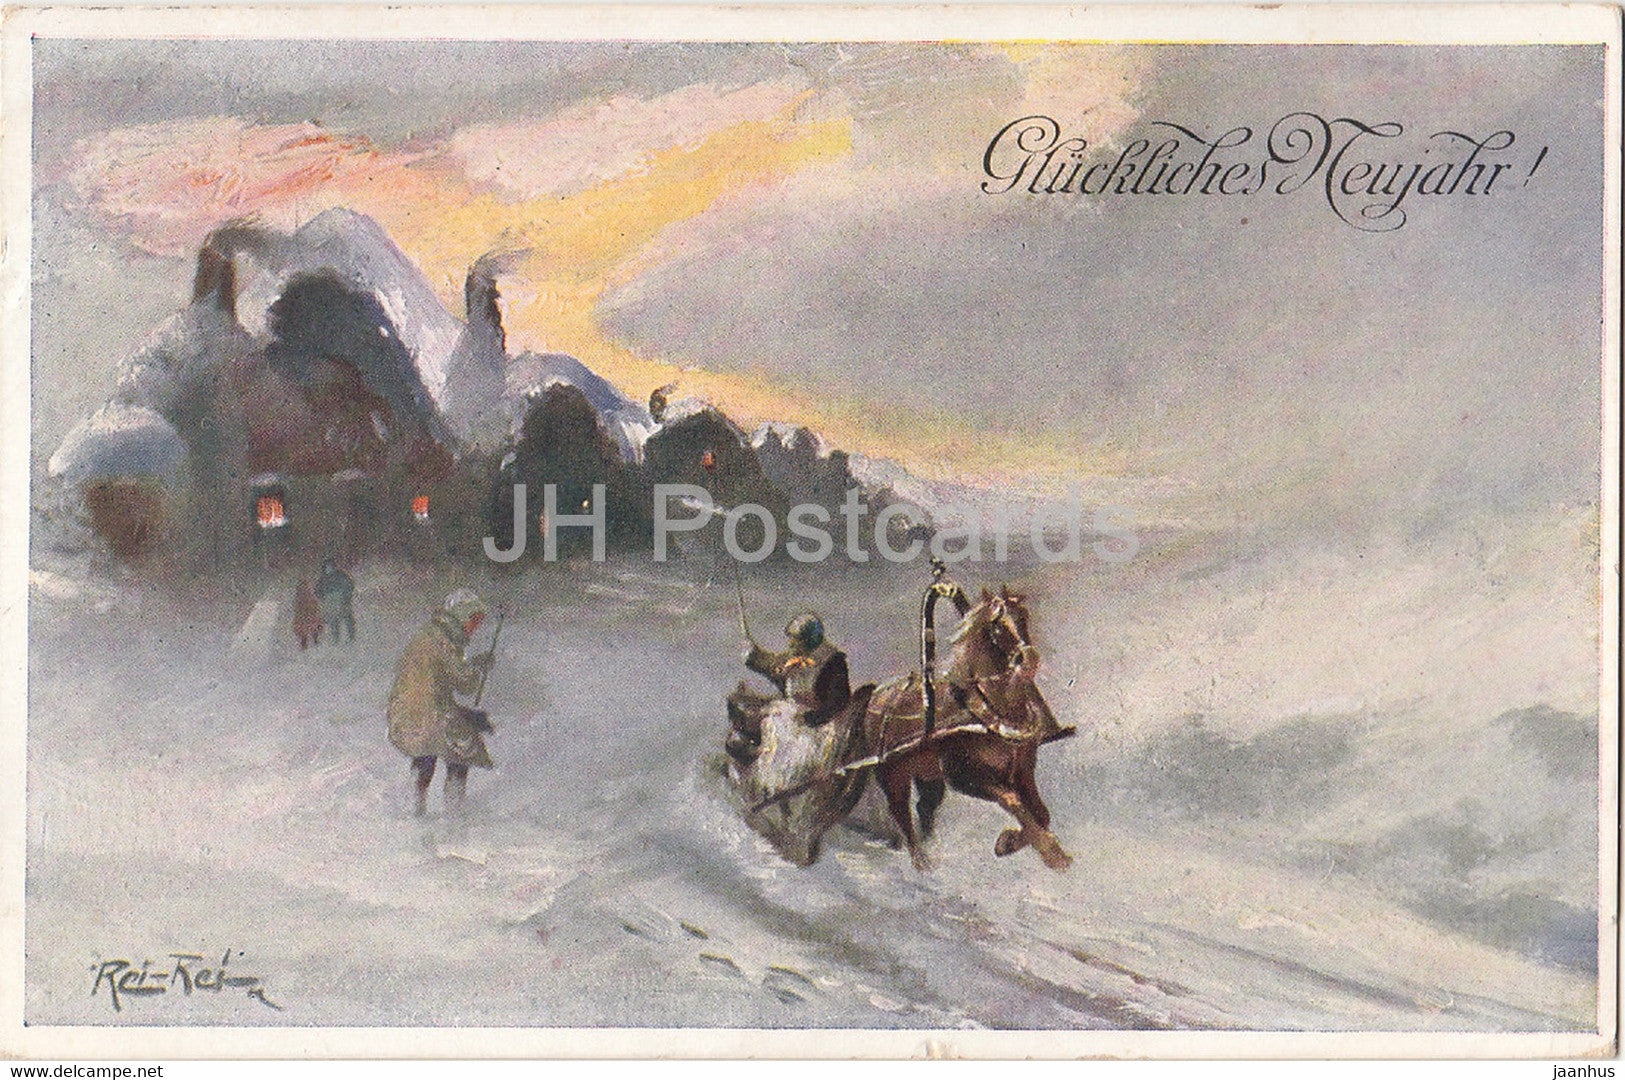 New Year Greeting Card - Gluckliches Neujahr - horse sledge - illustration  P M B 4281/2 - old postcard - Austria - used - JH Postcards